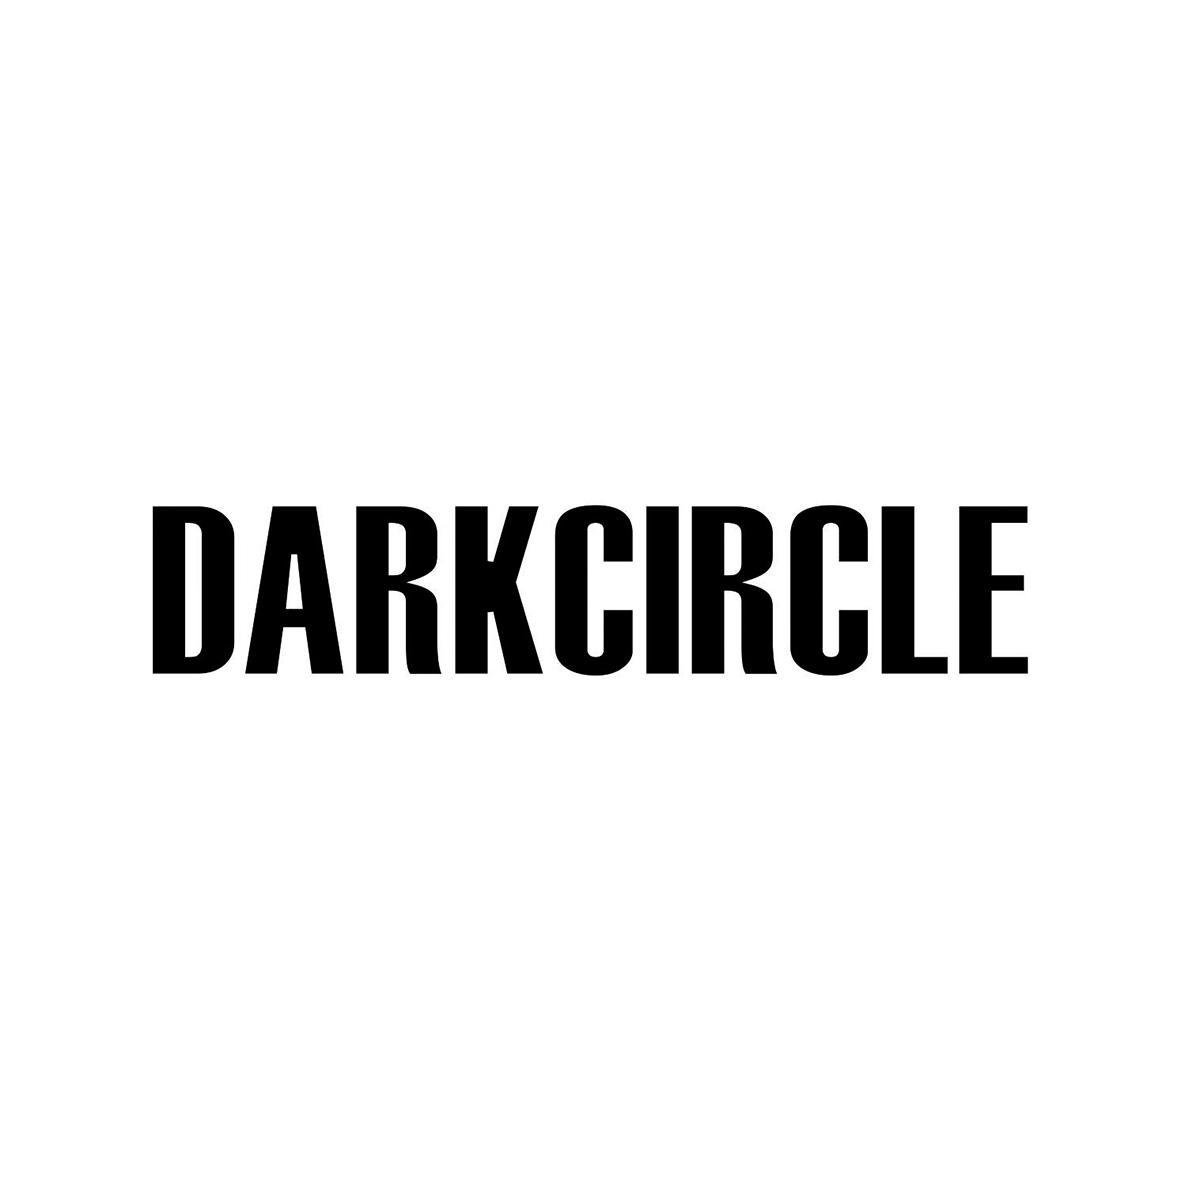 darkcircle 商标公告